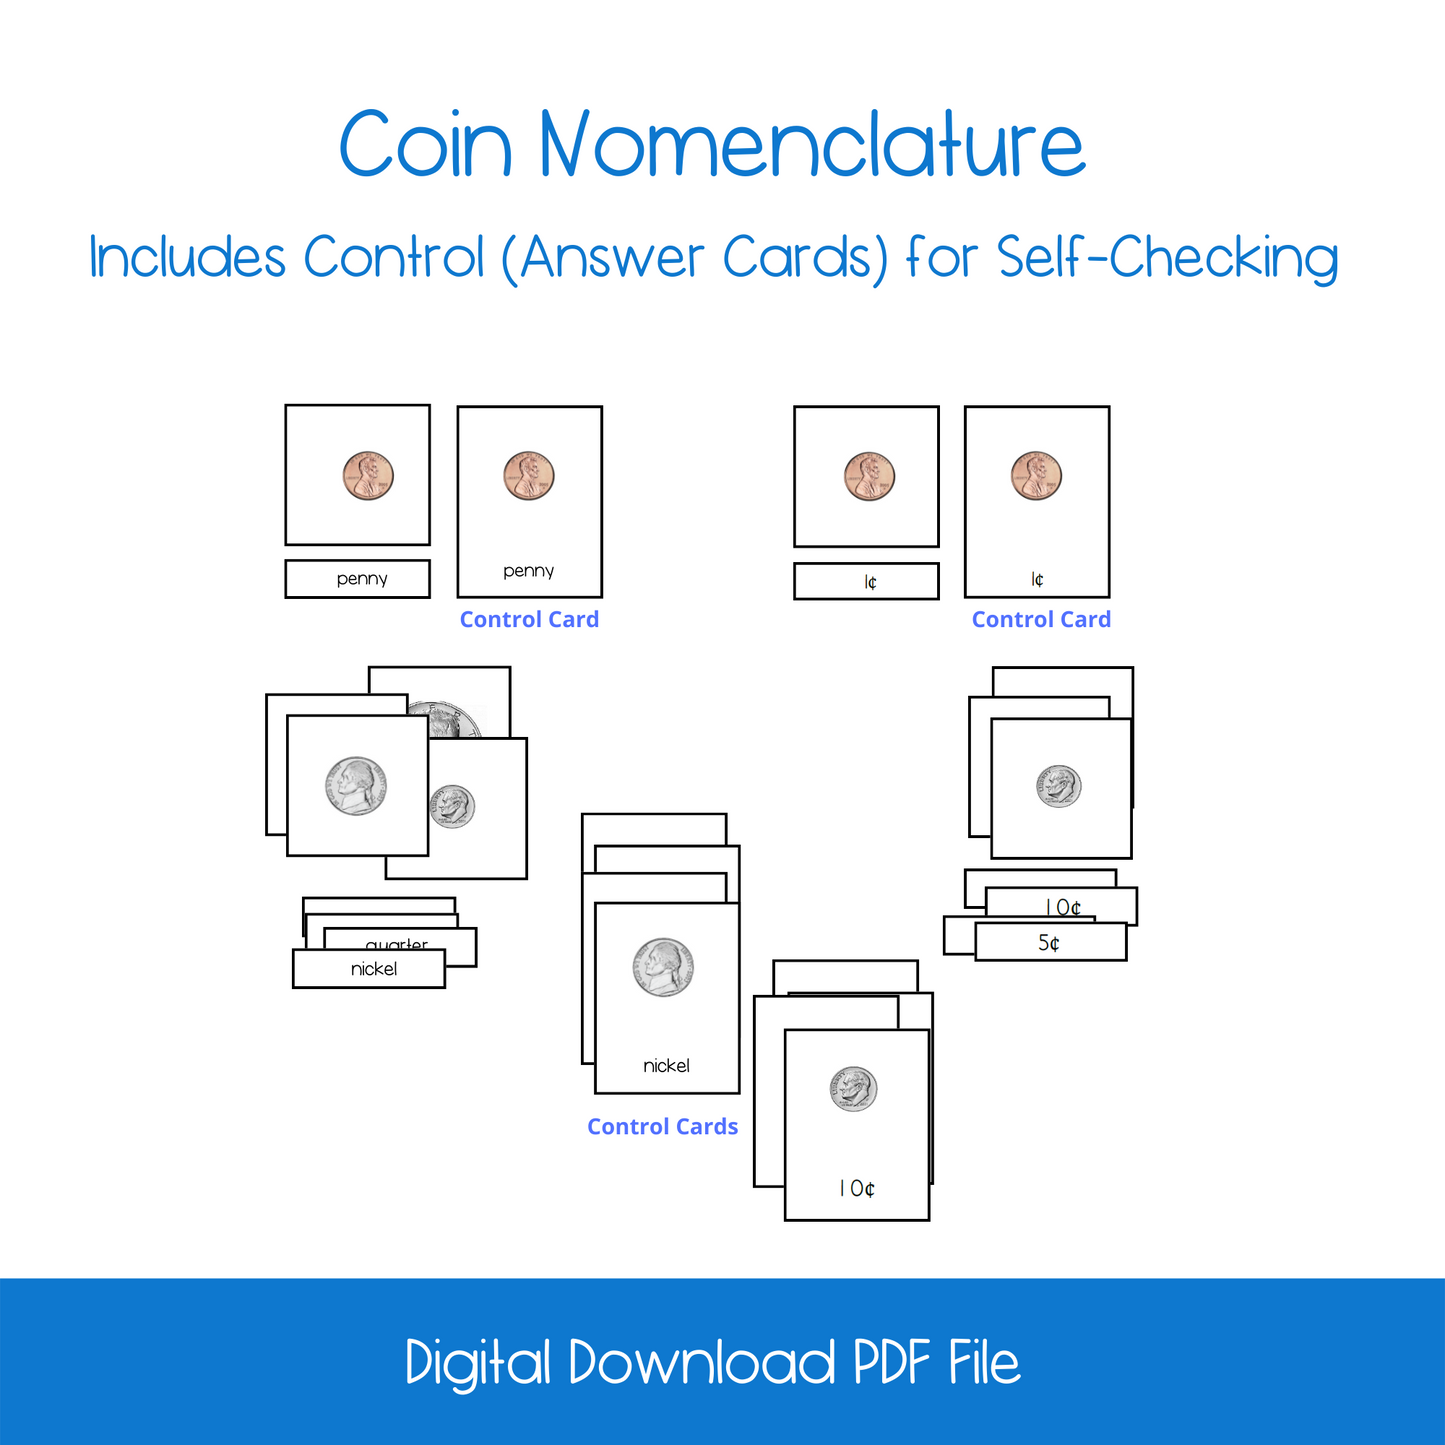 Coin Nomenclature Cards (2 sets)